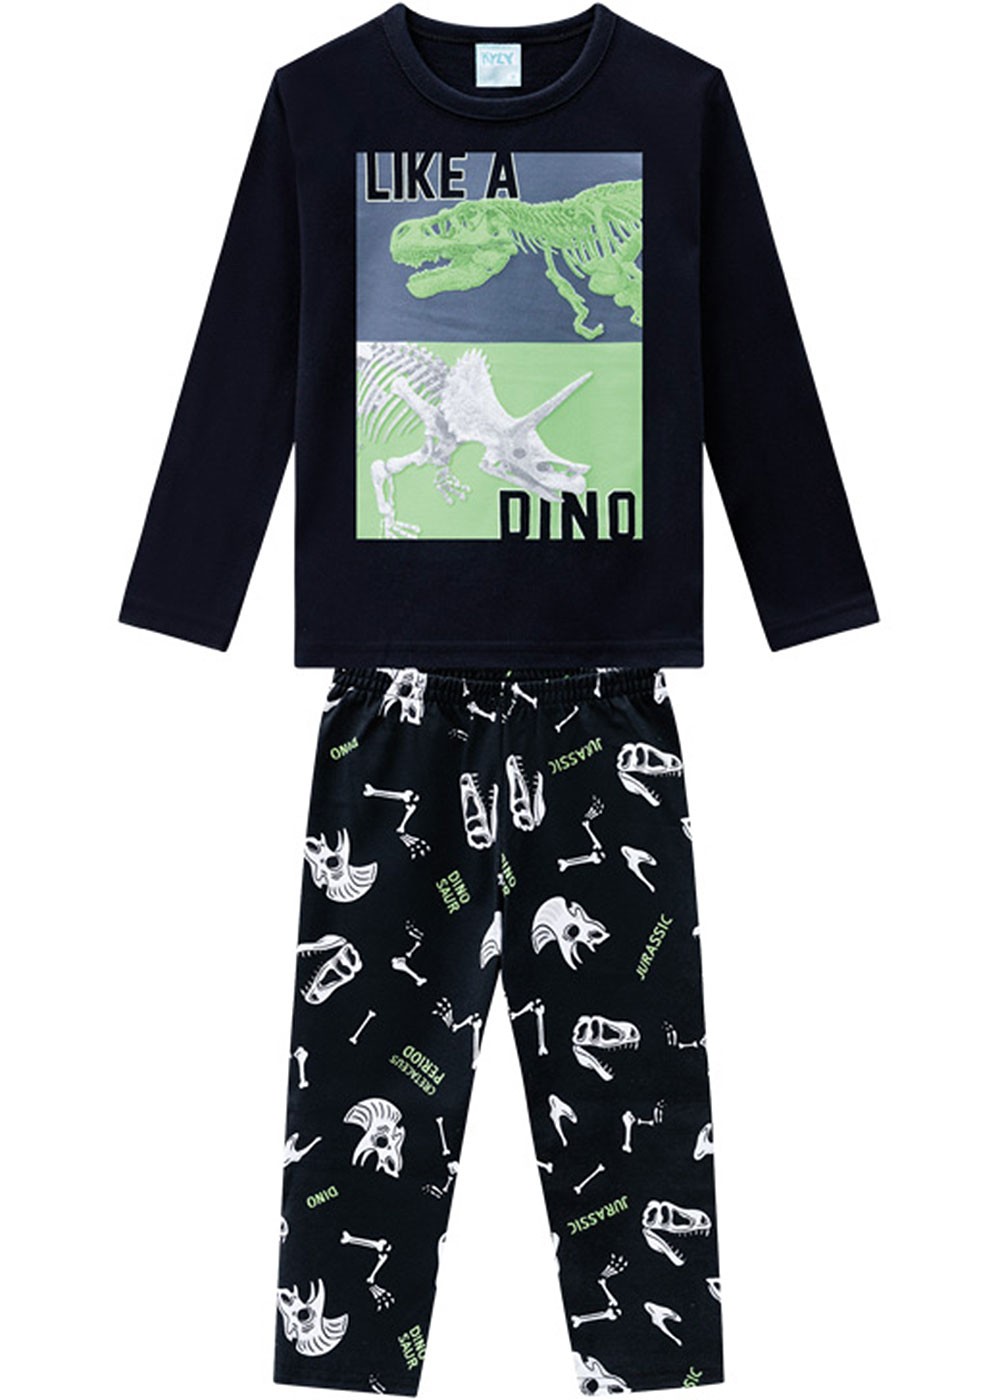 Pijama Infantil Masculino Preto que Brilha no Escuro Dino Inverno Kyly